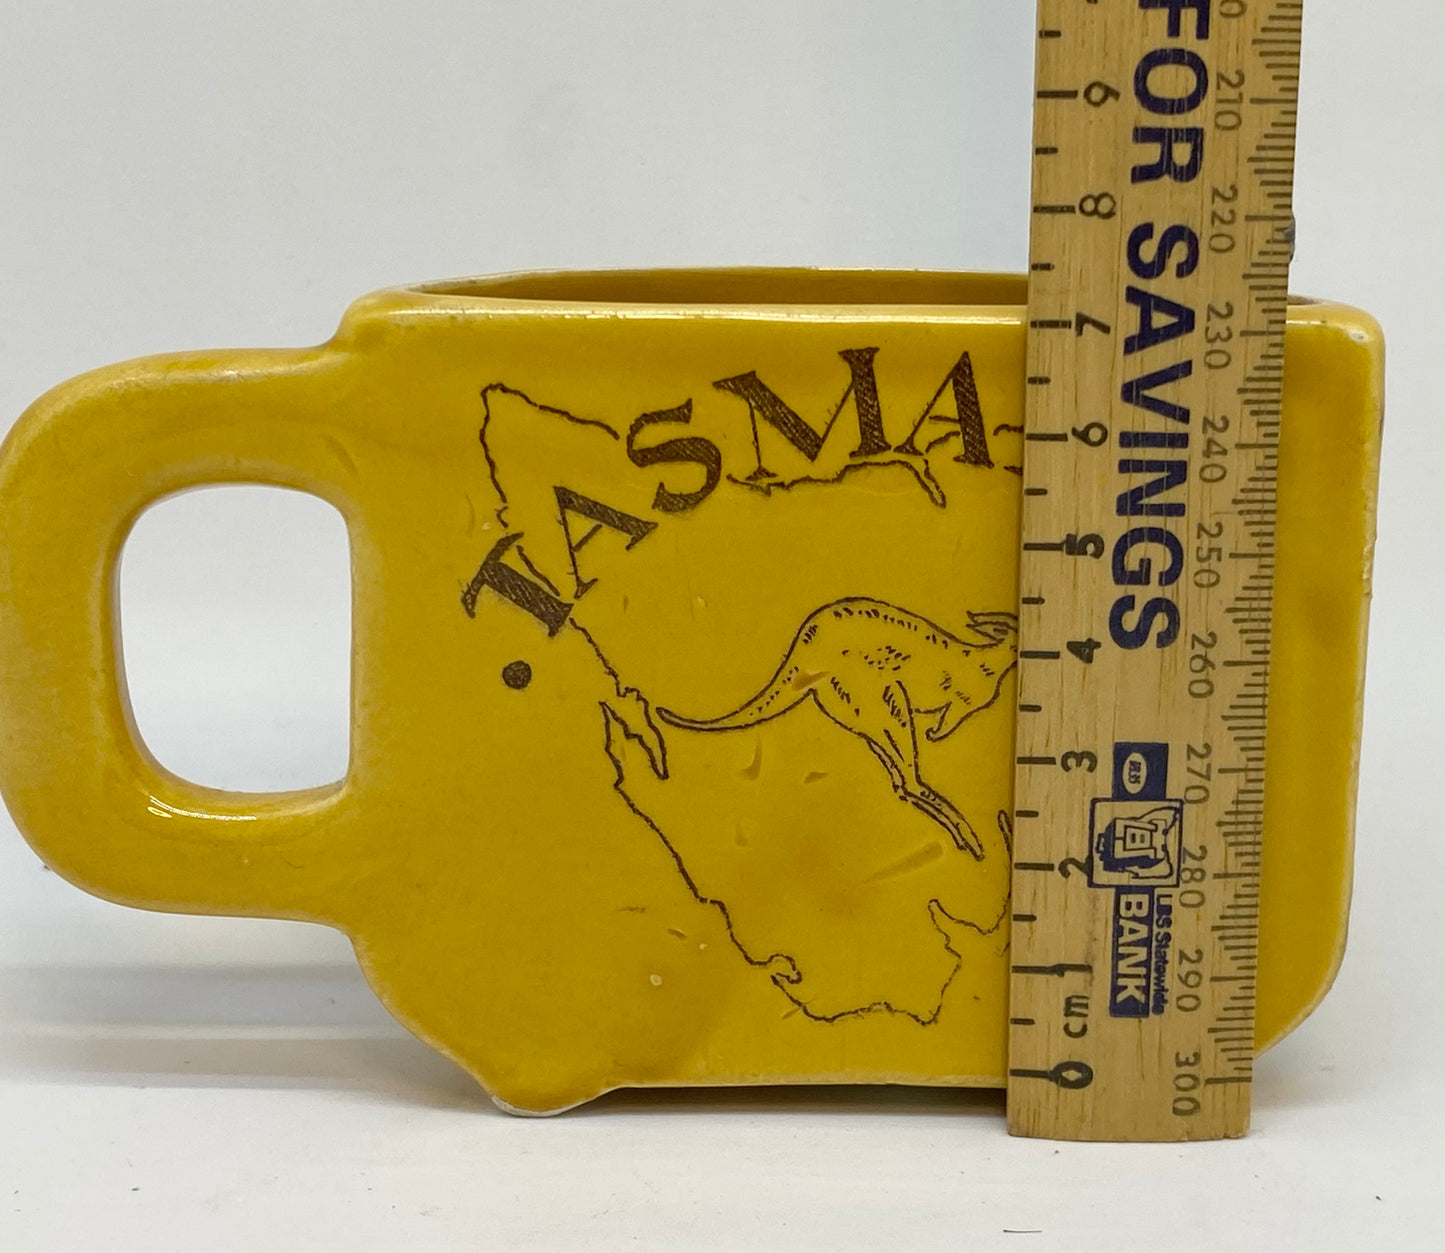 Vintage 1950s Tasmania tourist Half a Cup of Coffee cup